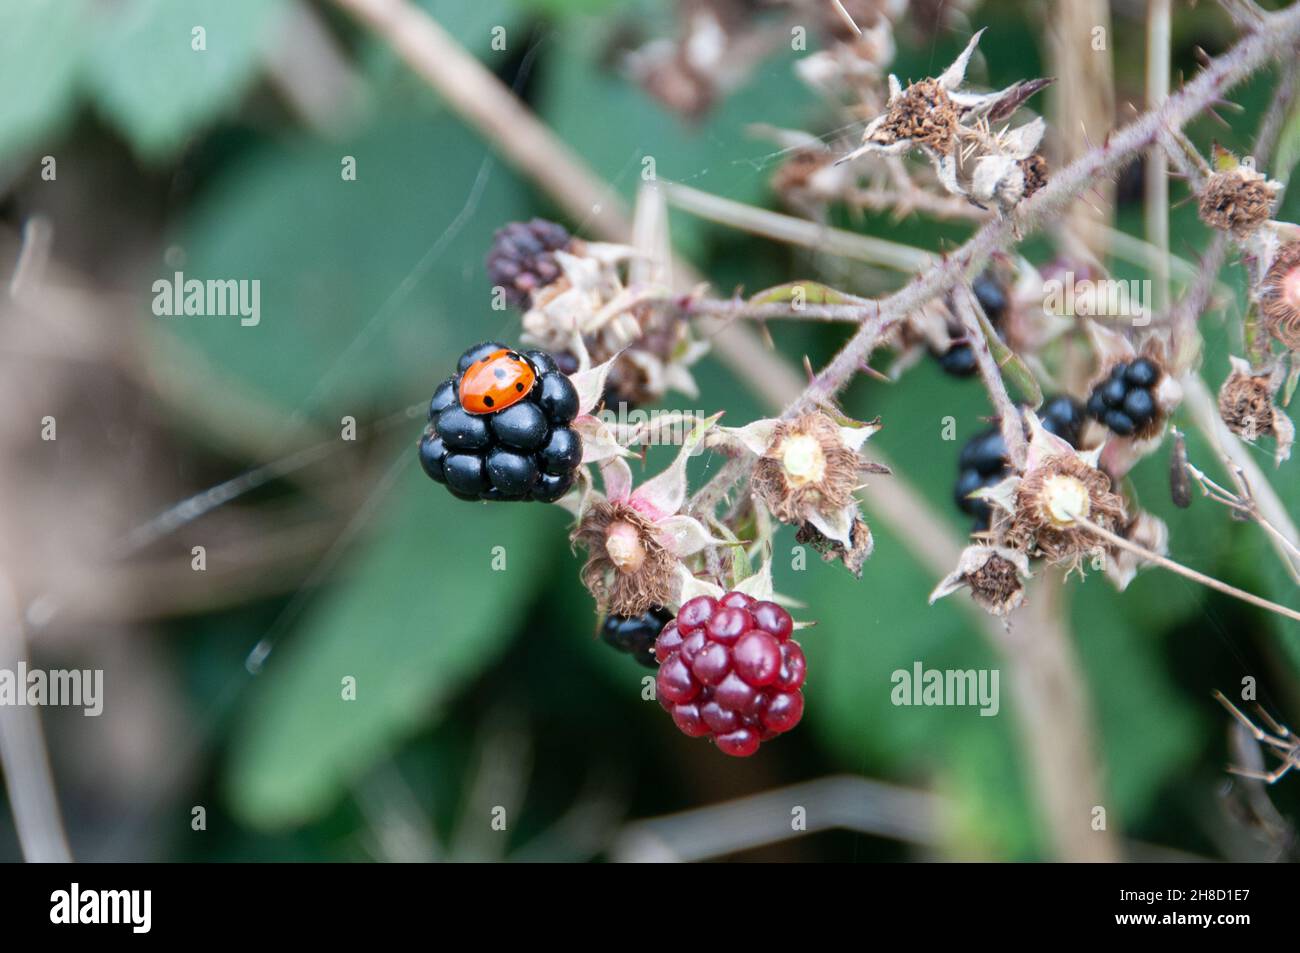 Around the UK - Wild Blackberries with a ladybird on a ripe fruit Stock Photo